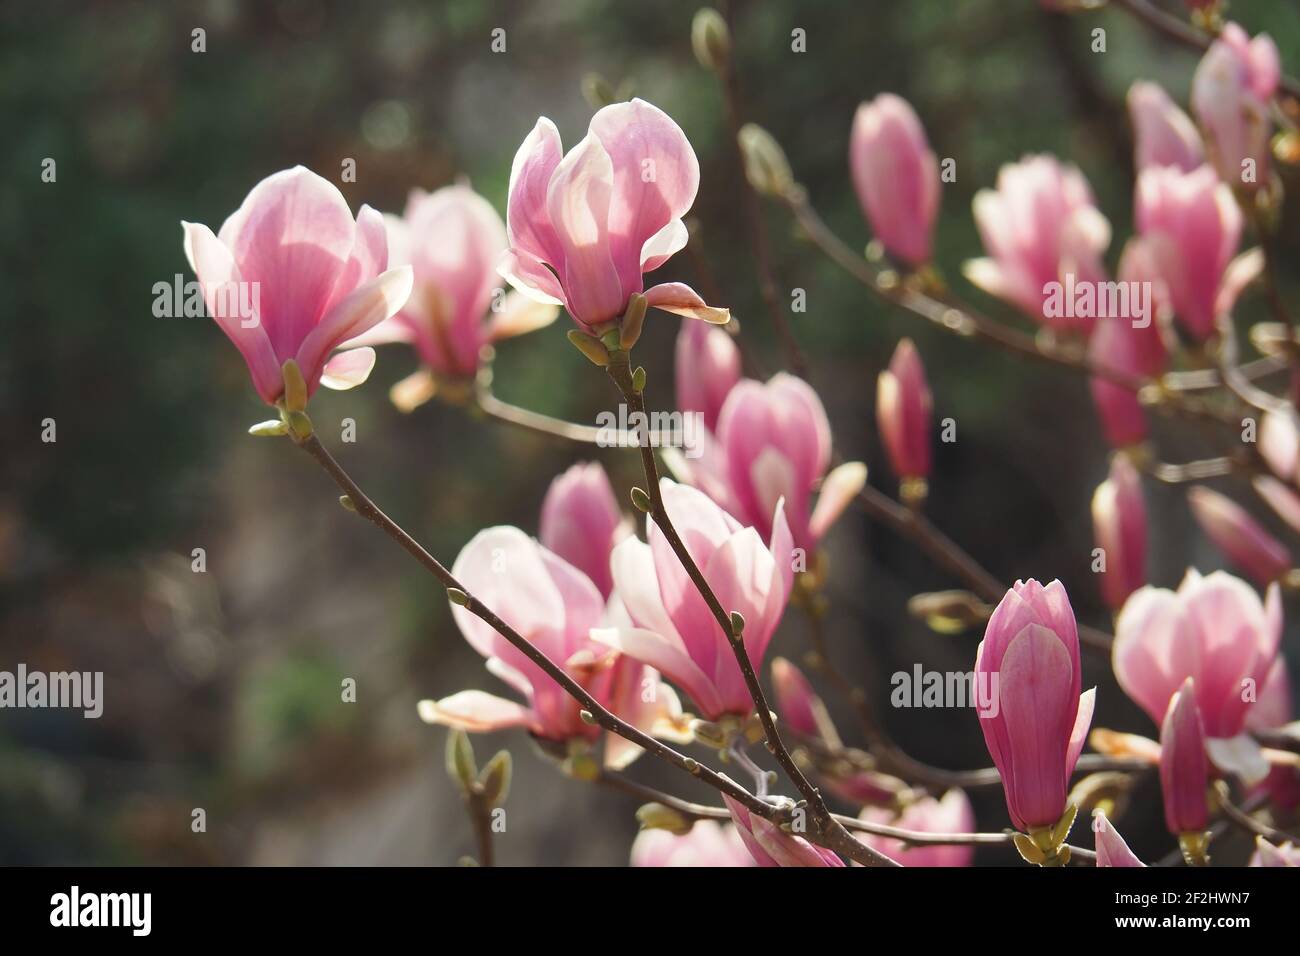 Magnolia soulangeana tree blossom in springtime. Tender pink flowers bathing in sunlight. Stock Photo